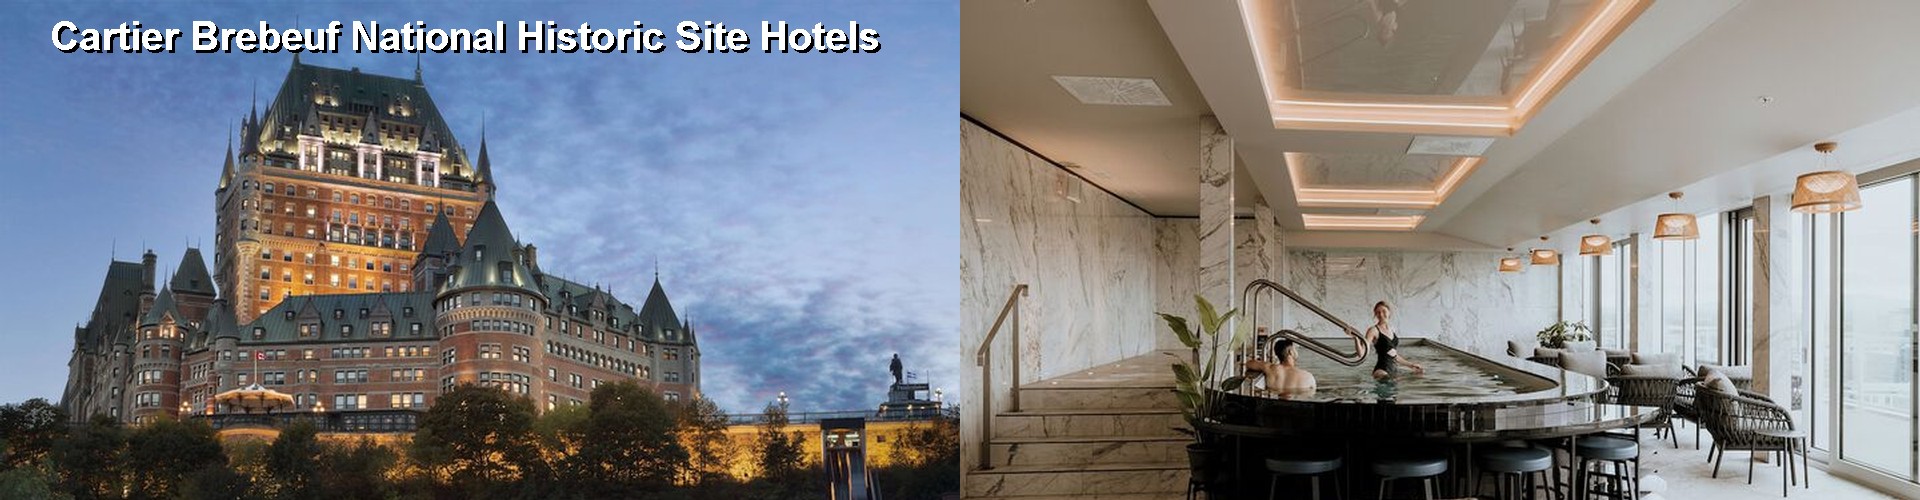 5 Best Hotels near Cartier Brebeuf National Historic Site